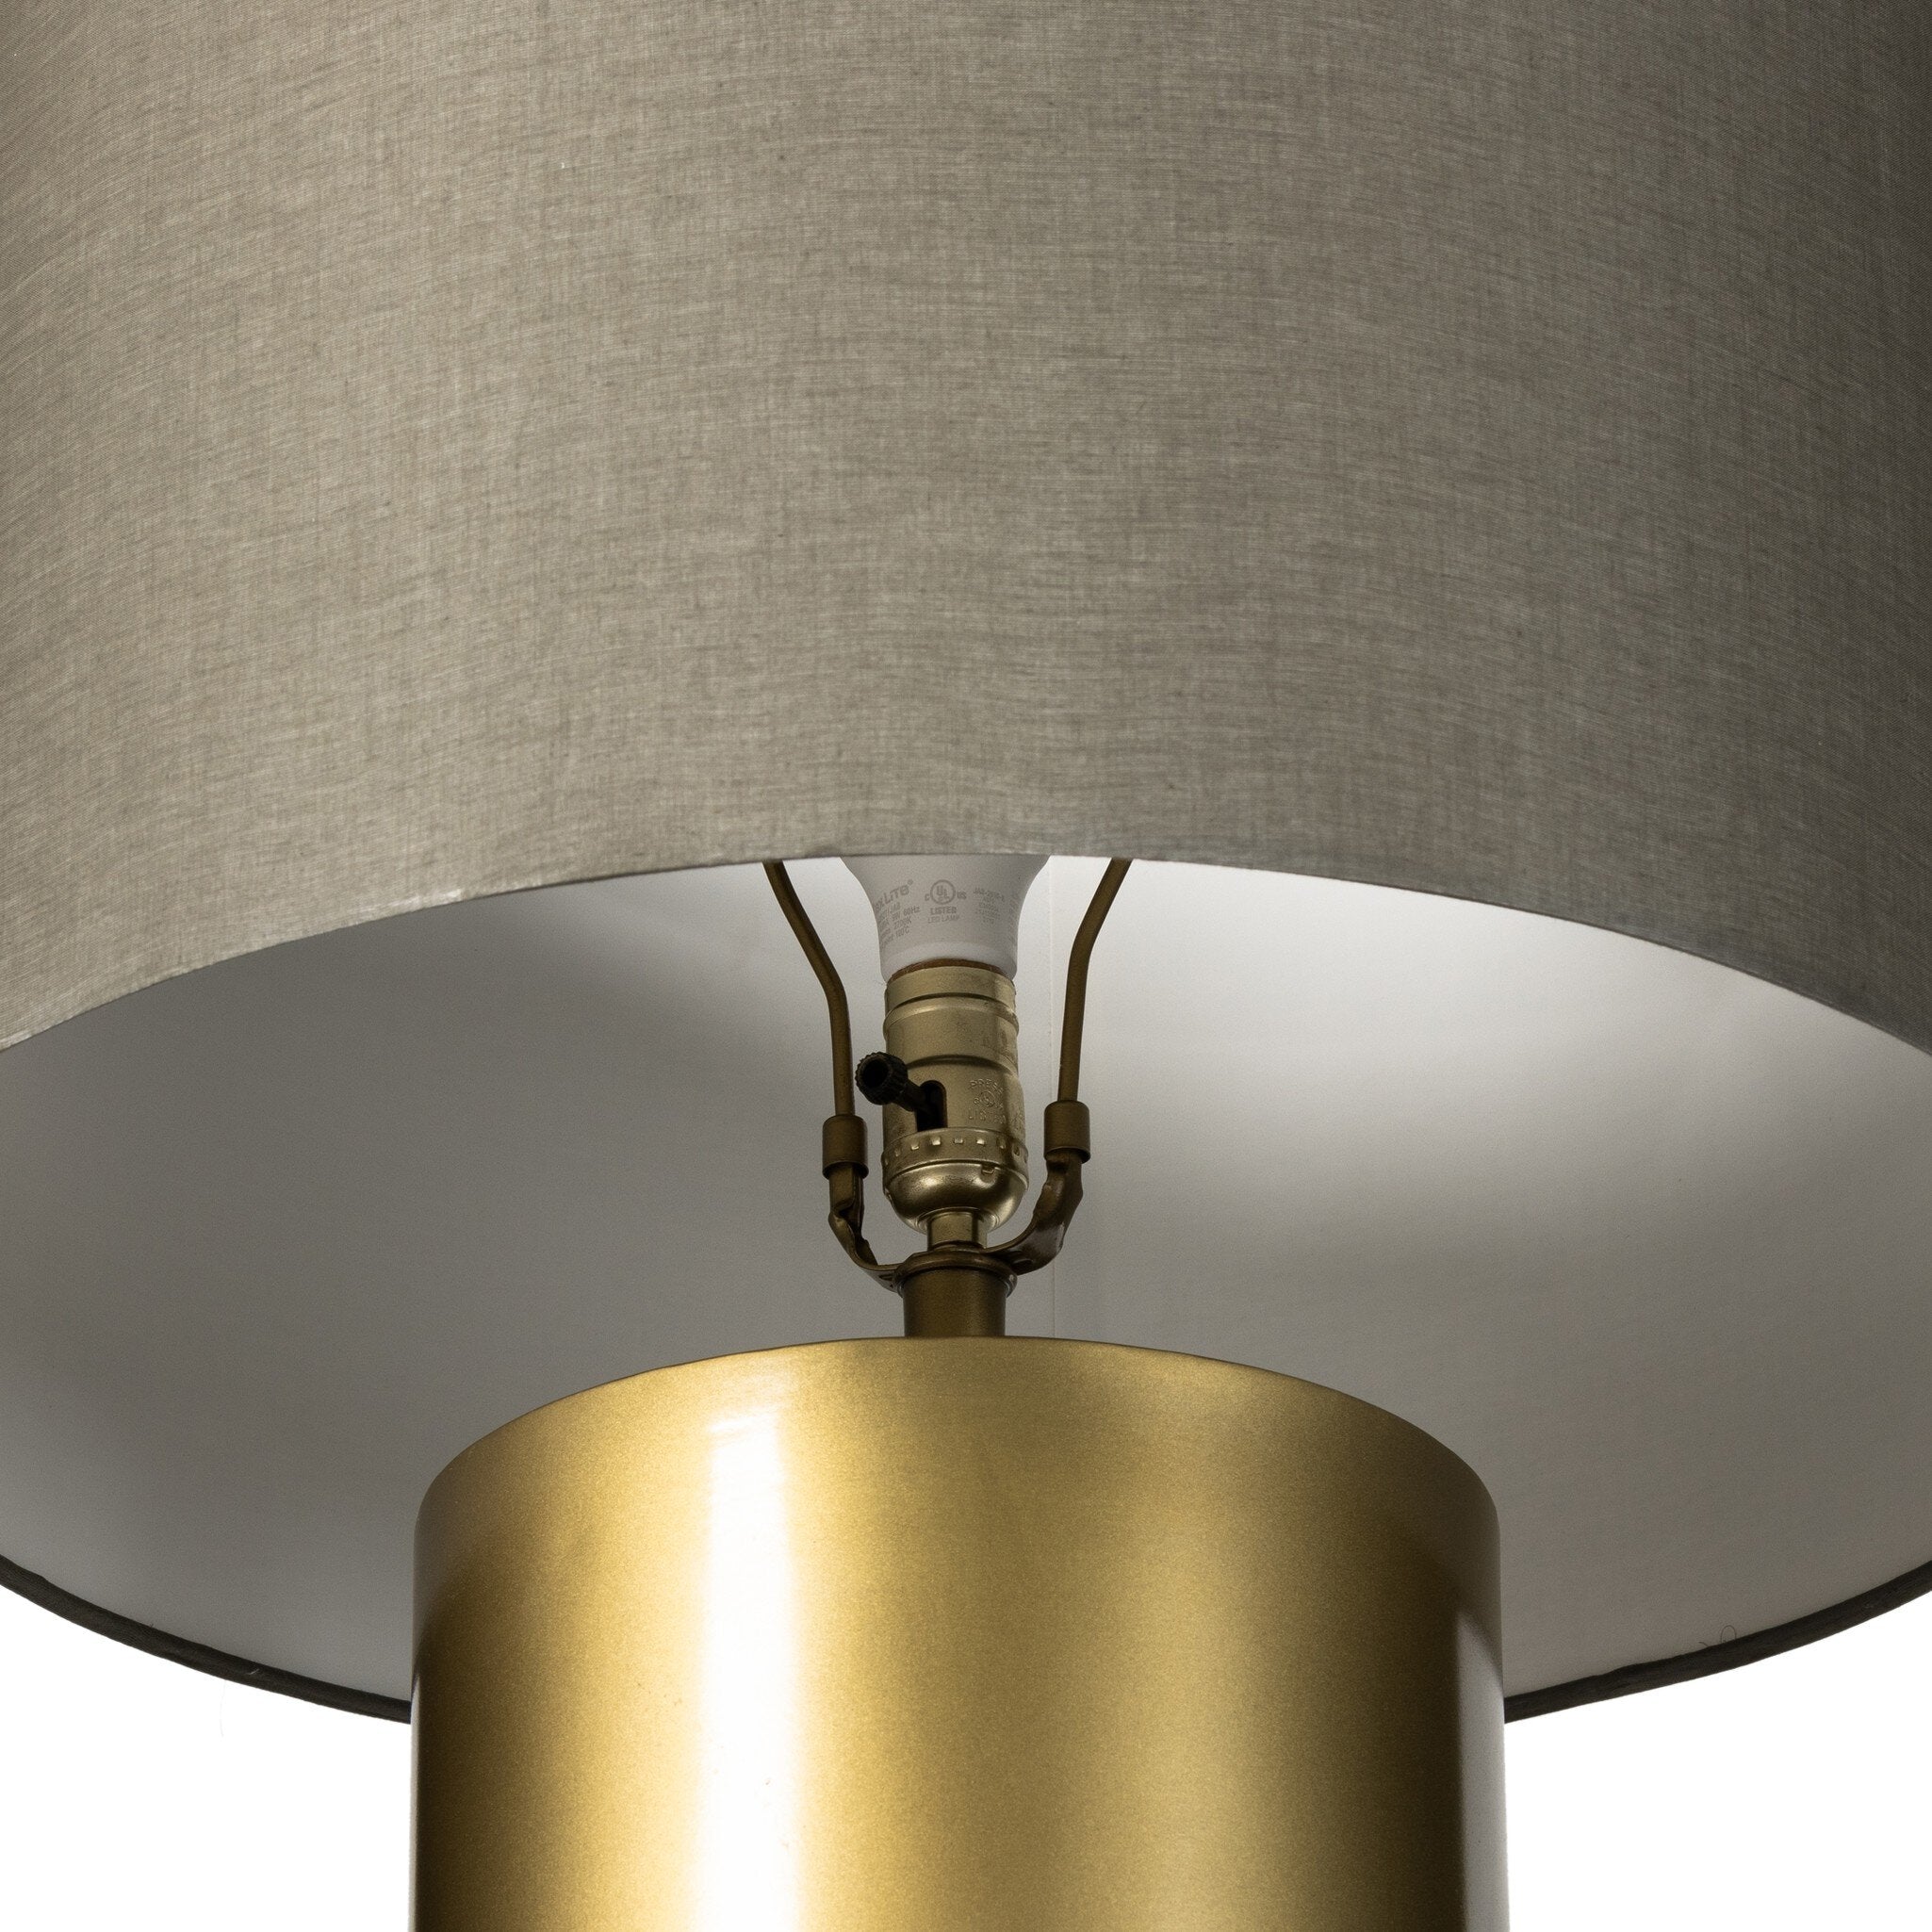 Cameron Floor Lamp - Ombre Antique Brass